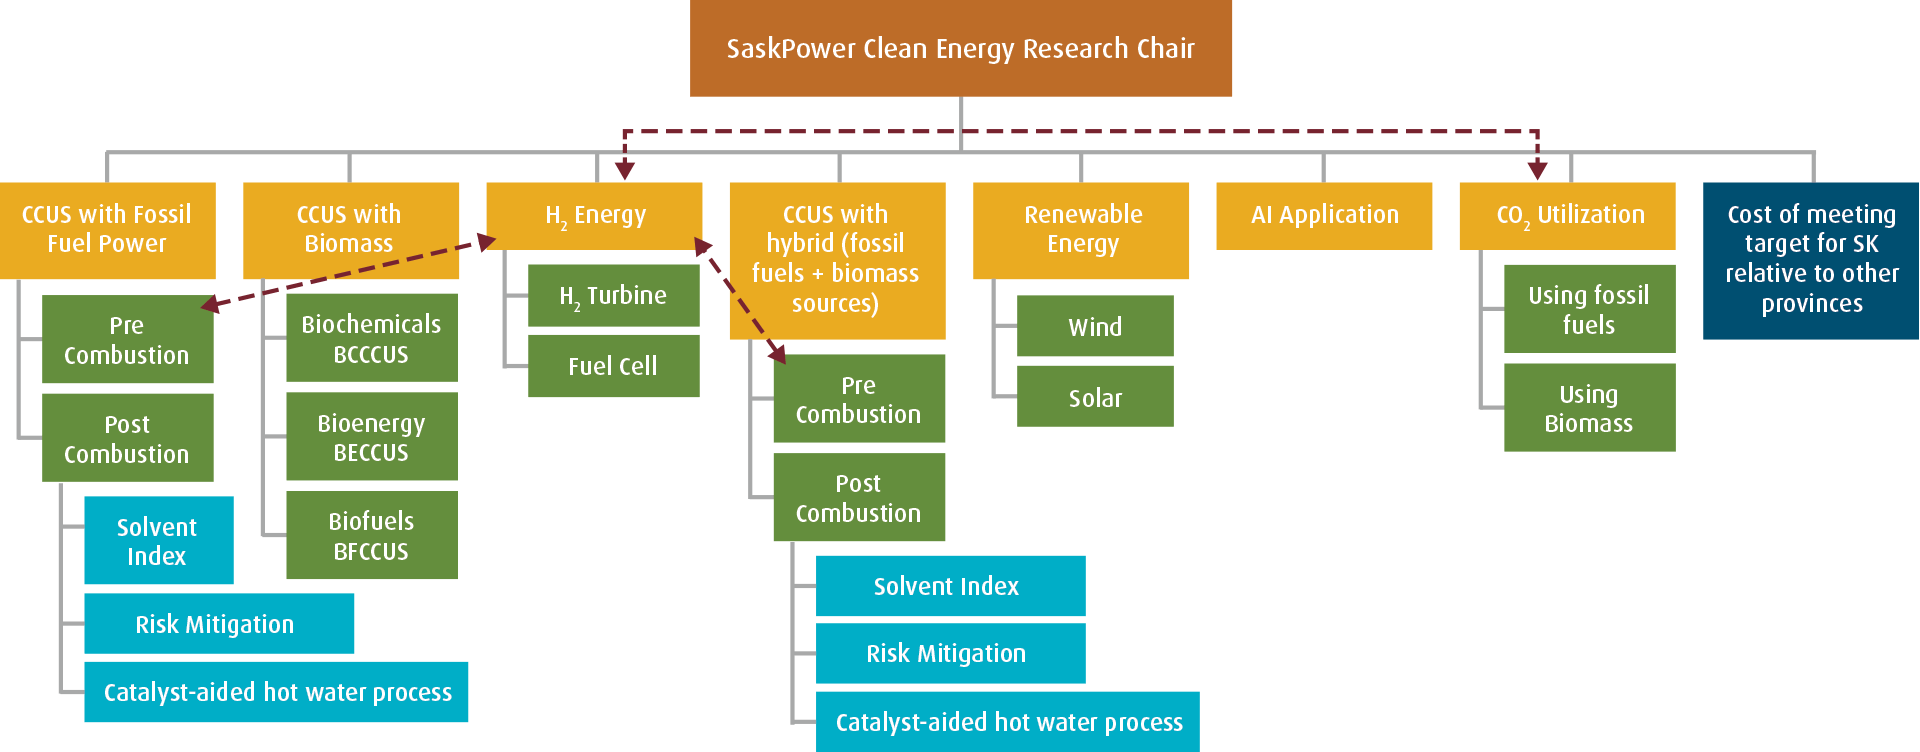 SCERCh Strategy Diagram